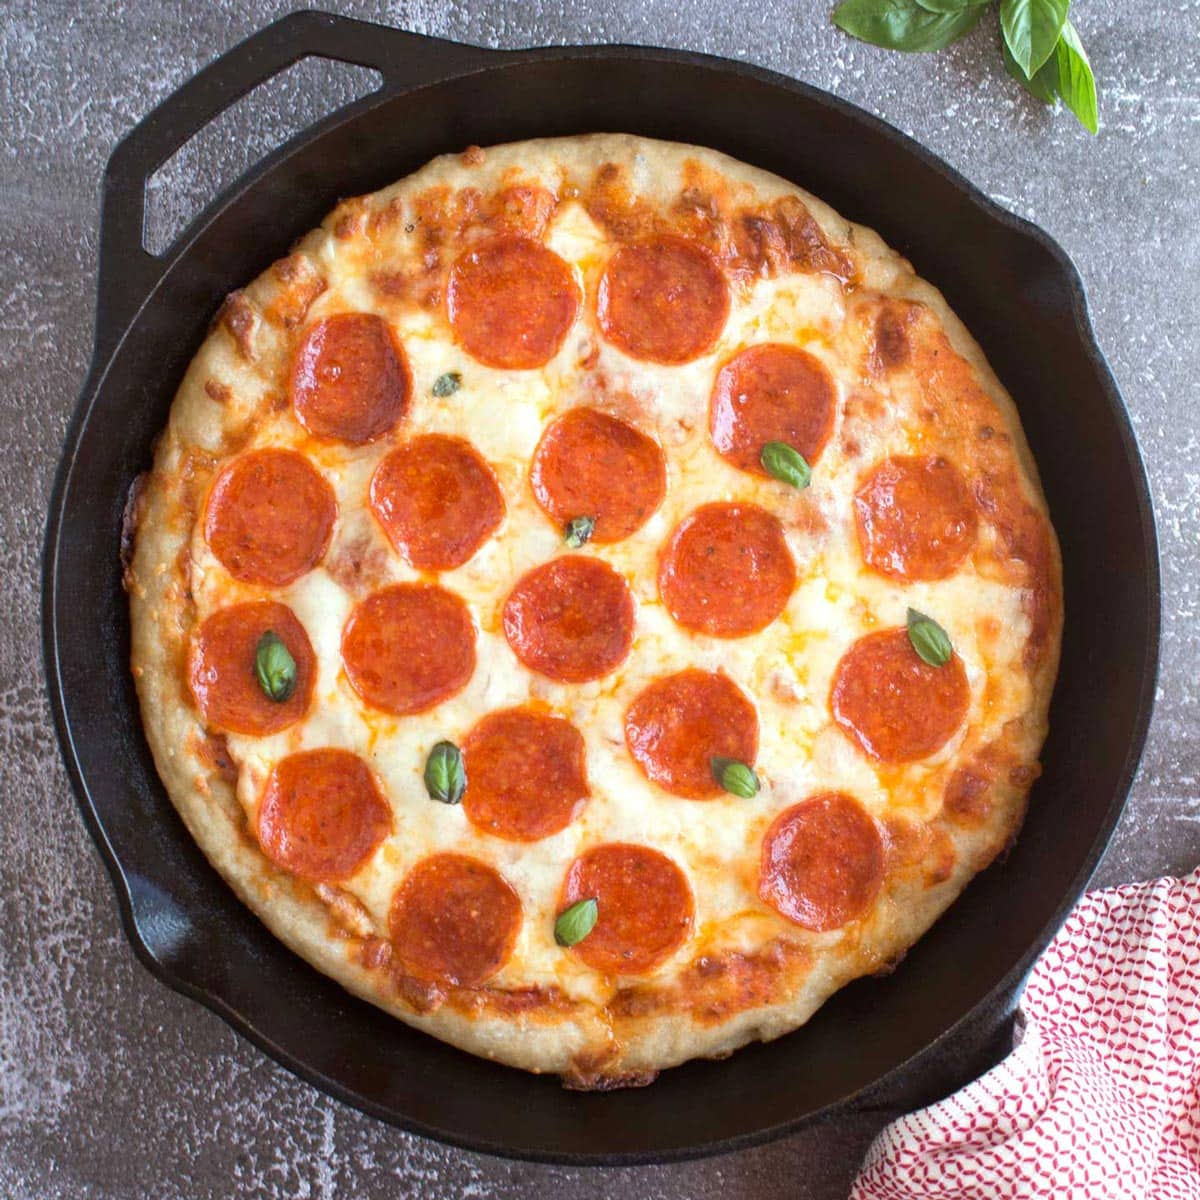 https://borrowedbites.com/wp-content/uploads/2020/09/Square-Whole-Pizza-in-Skillet.jpg